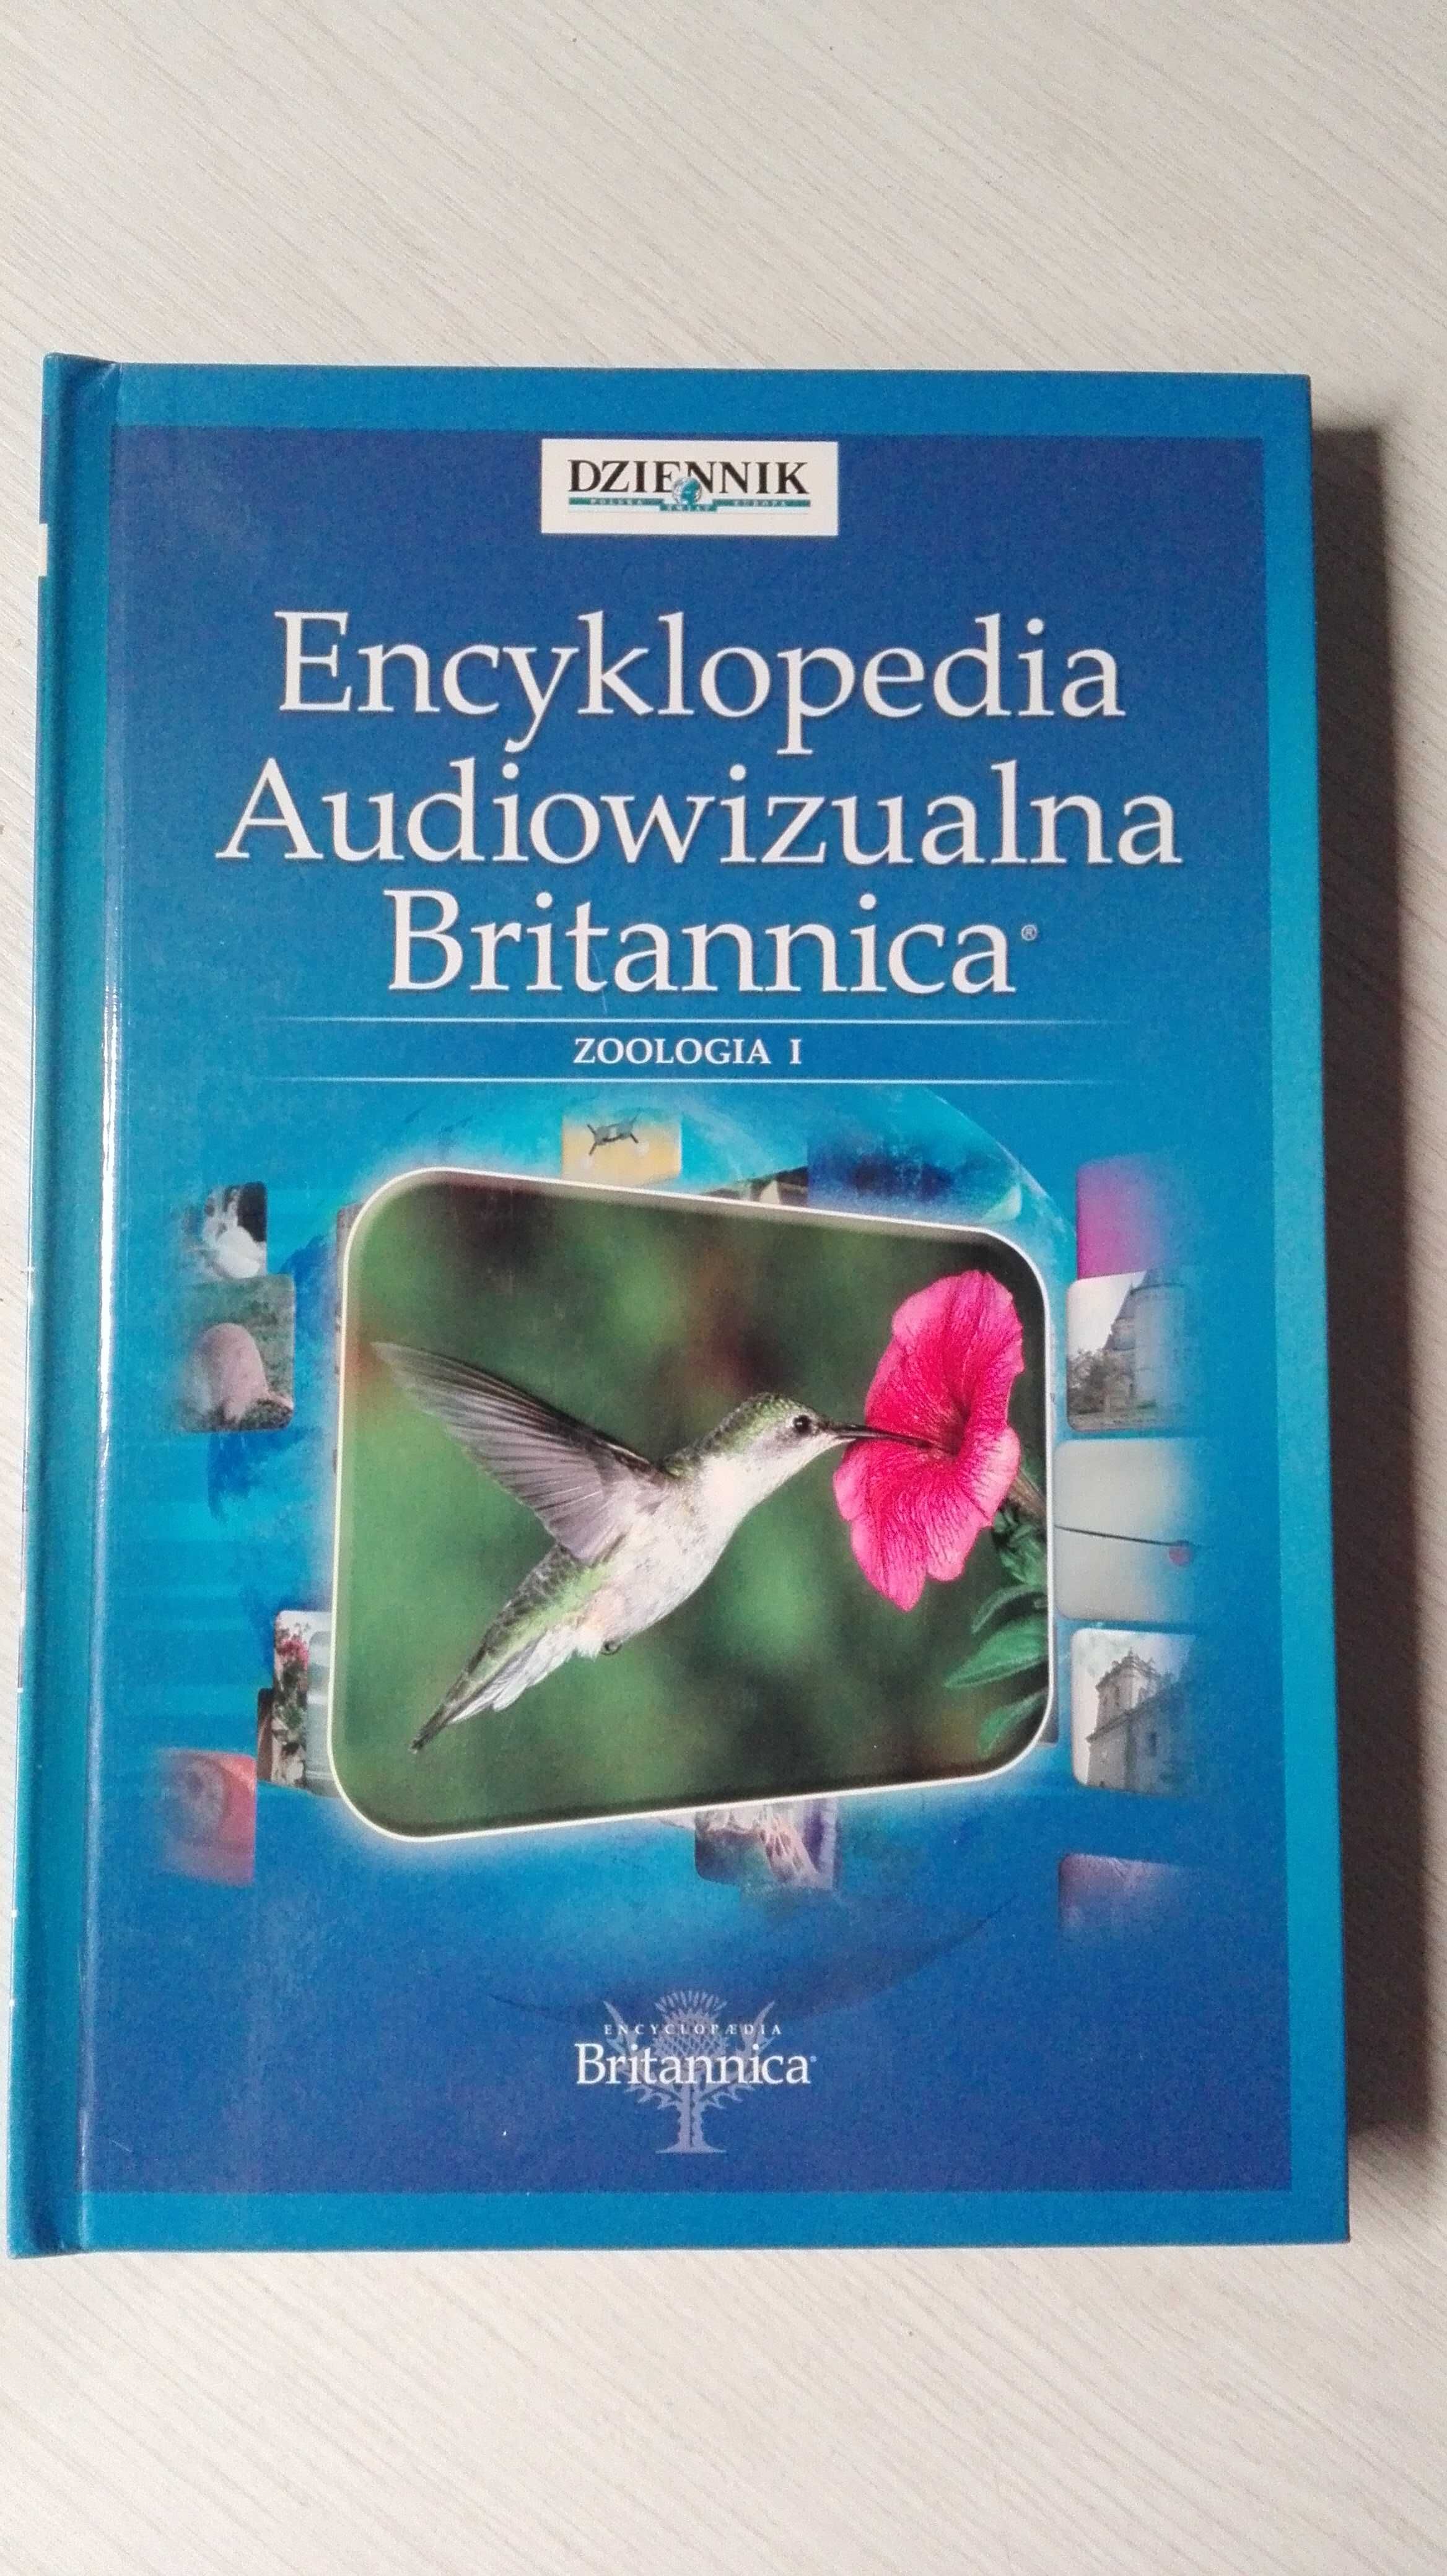 Encyklopedia Audiowizualna Britannica. Zoologia 1.